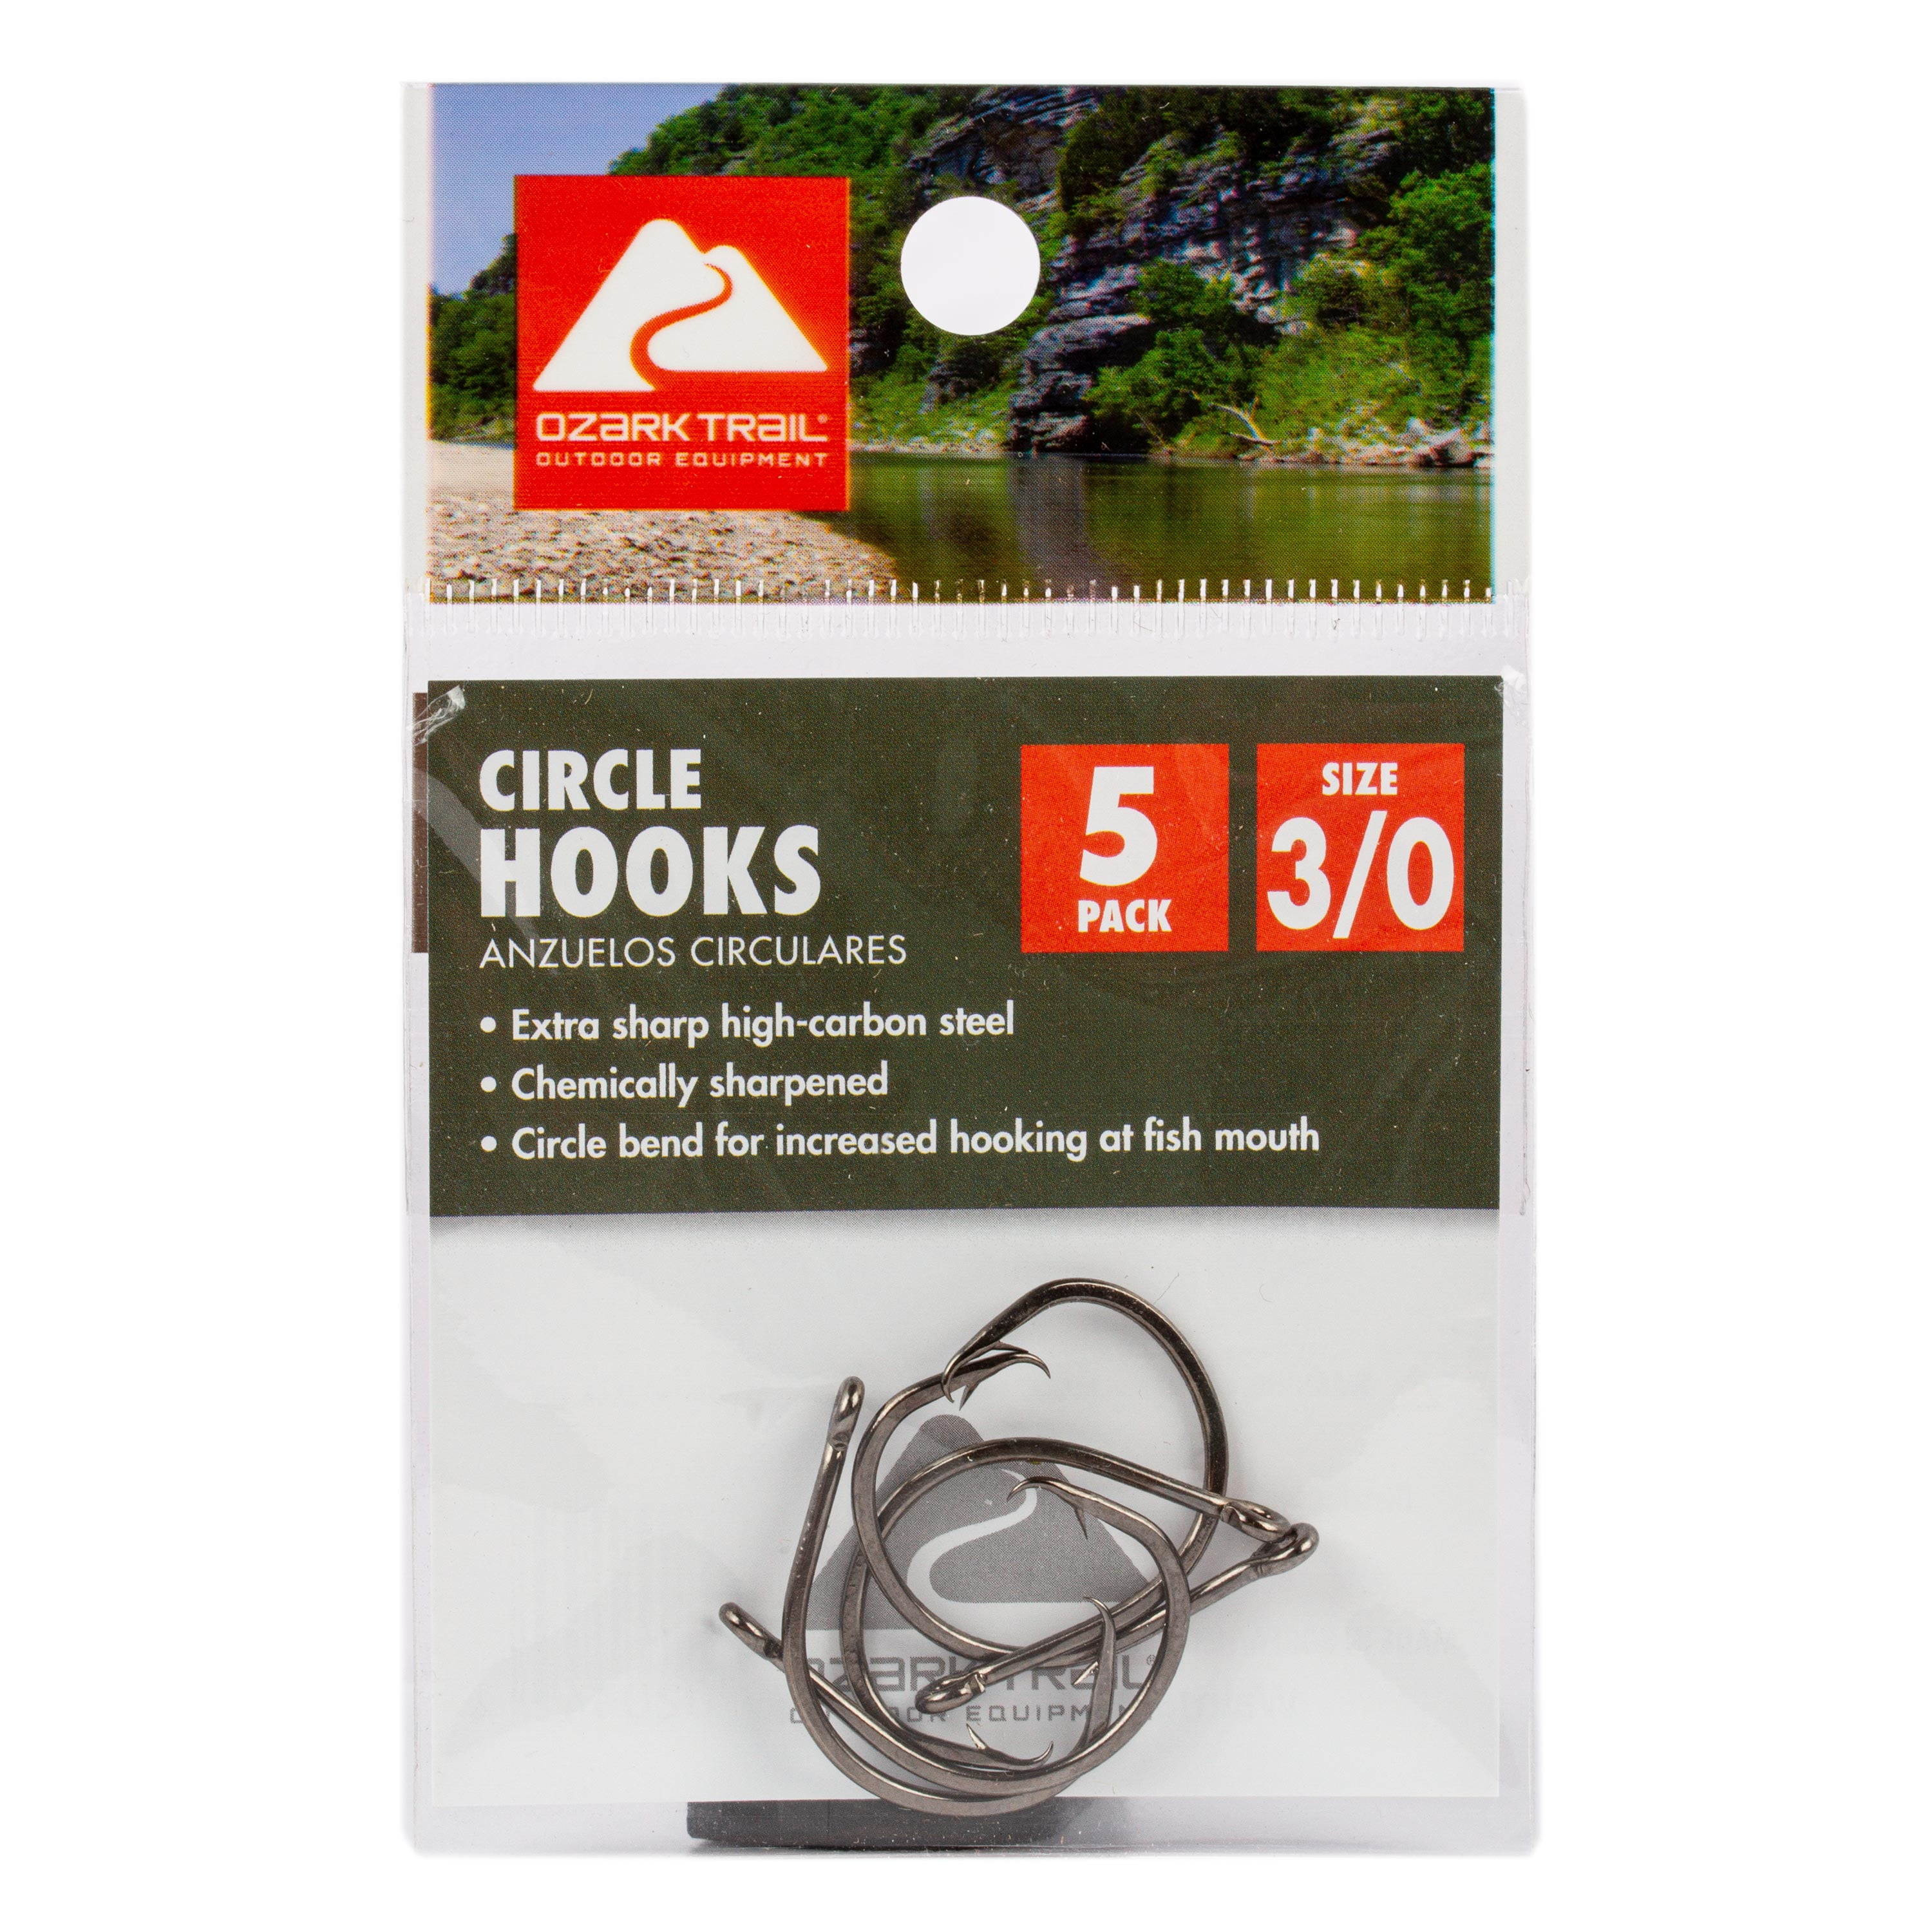 Ozark Trail 3/0 Premium High Carbon Steel Circle Hooks, 5 Count 